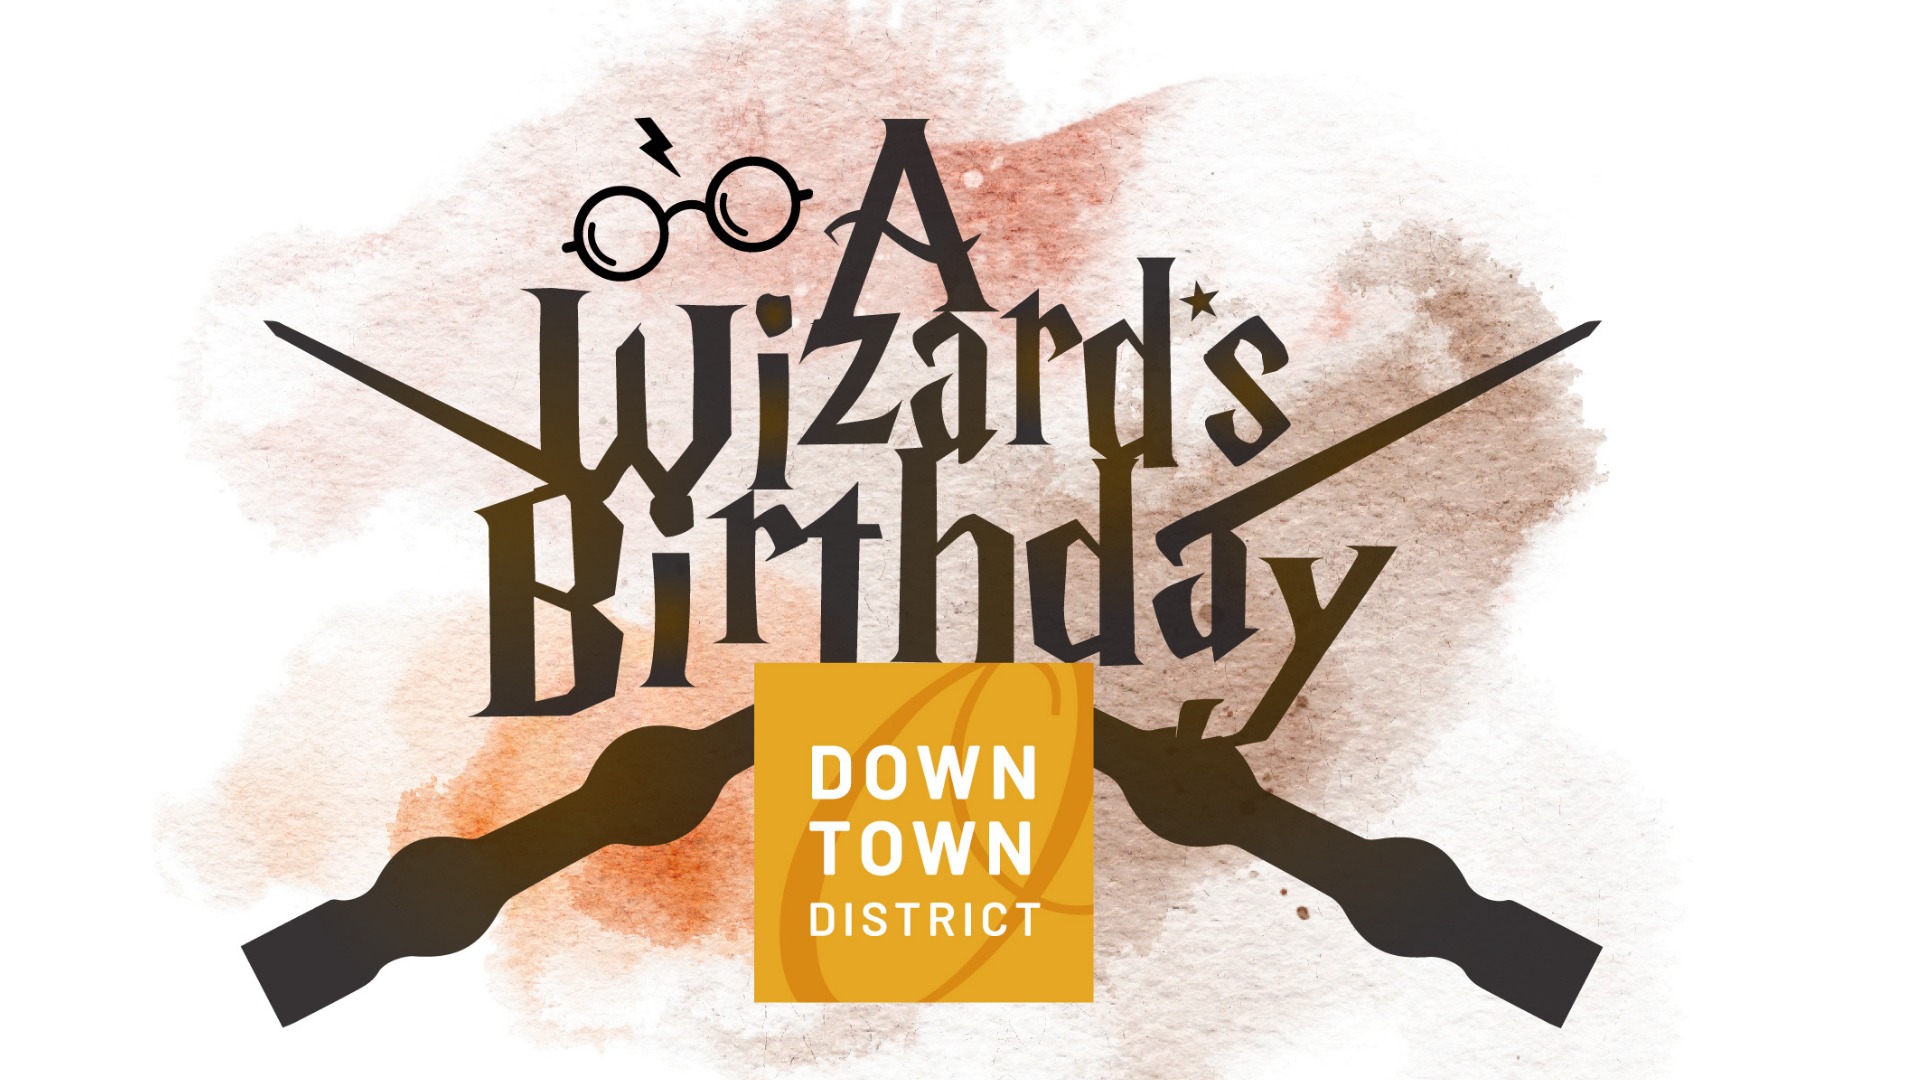 A Wizard's Birthday